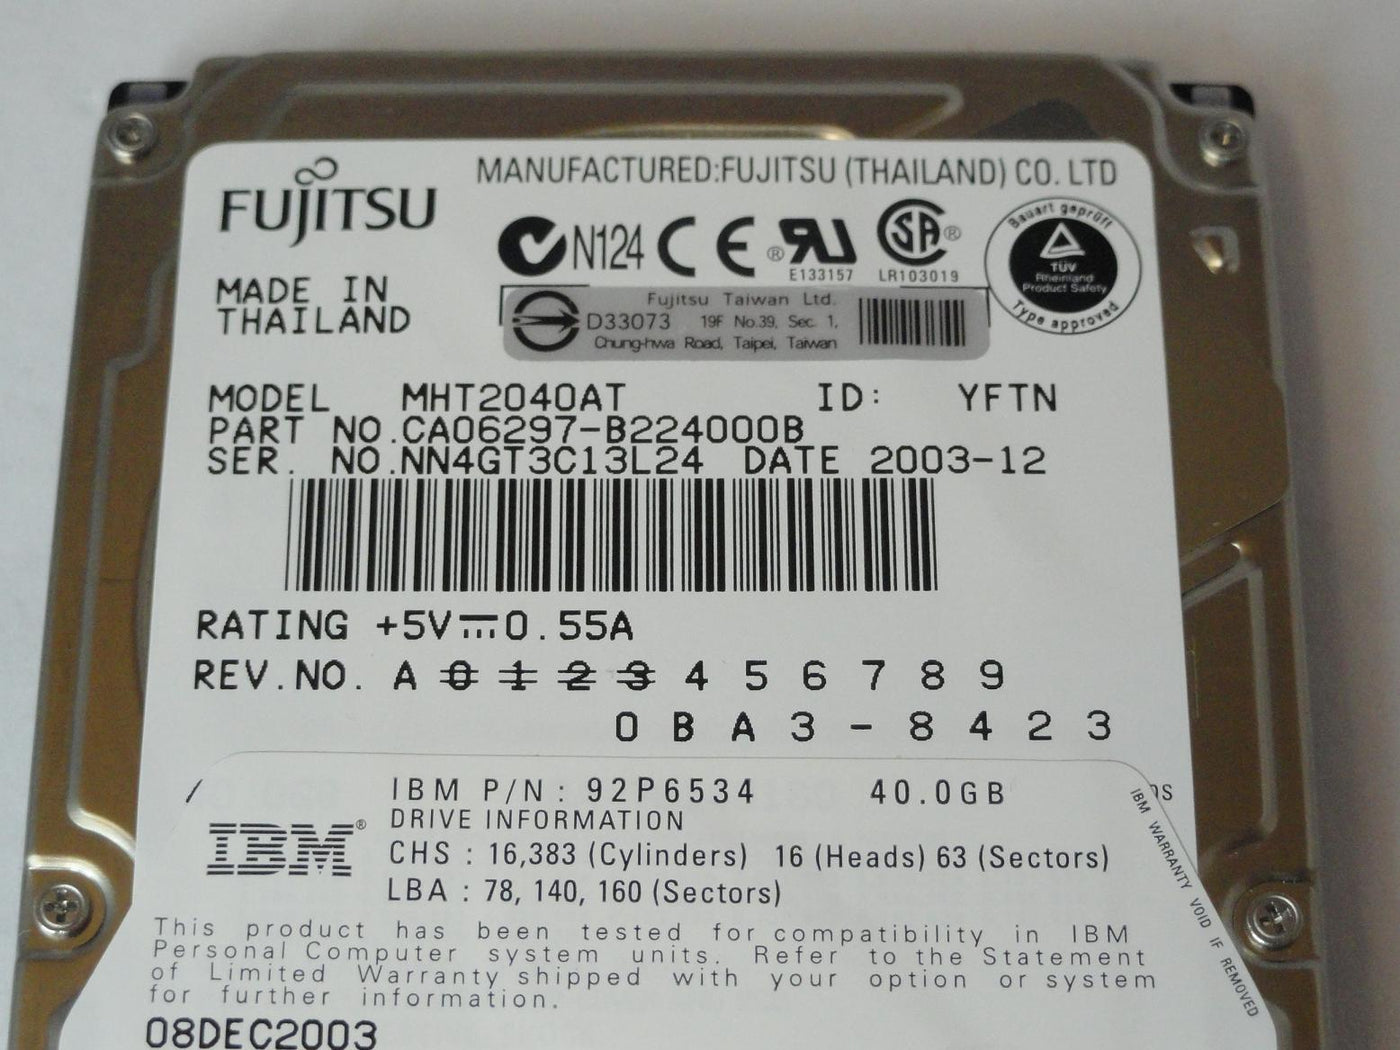 PR23051_CA06297-B224000B_Fujitsu IBM 40Gb IDE 4200rpm 2.5in HDD - Image3